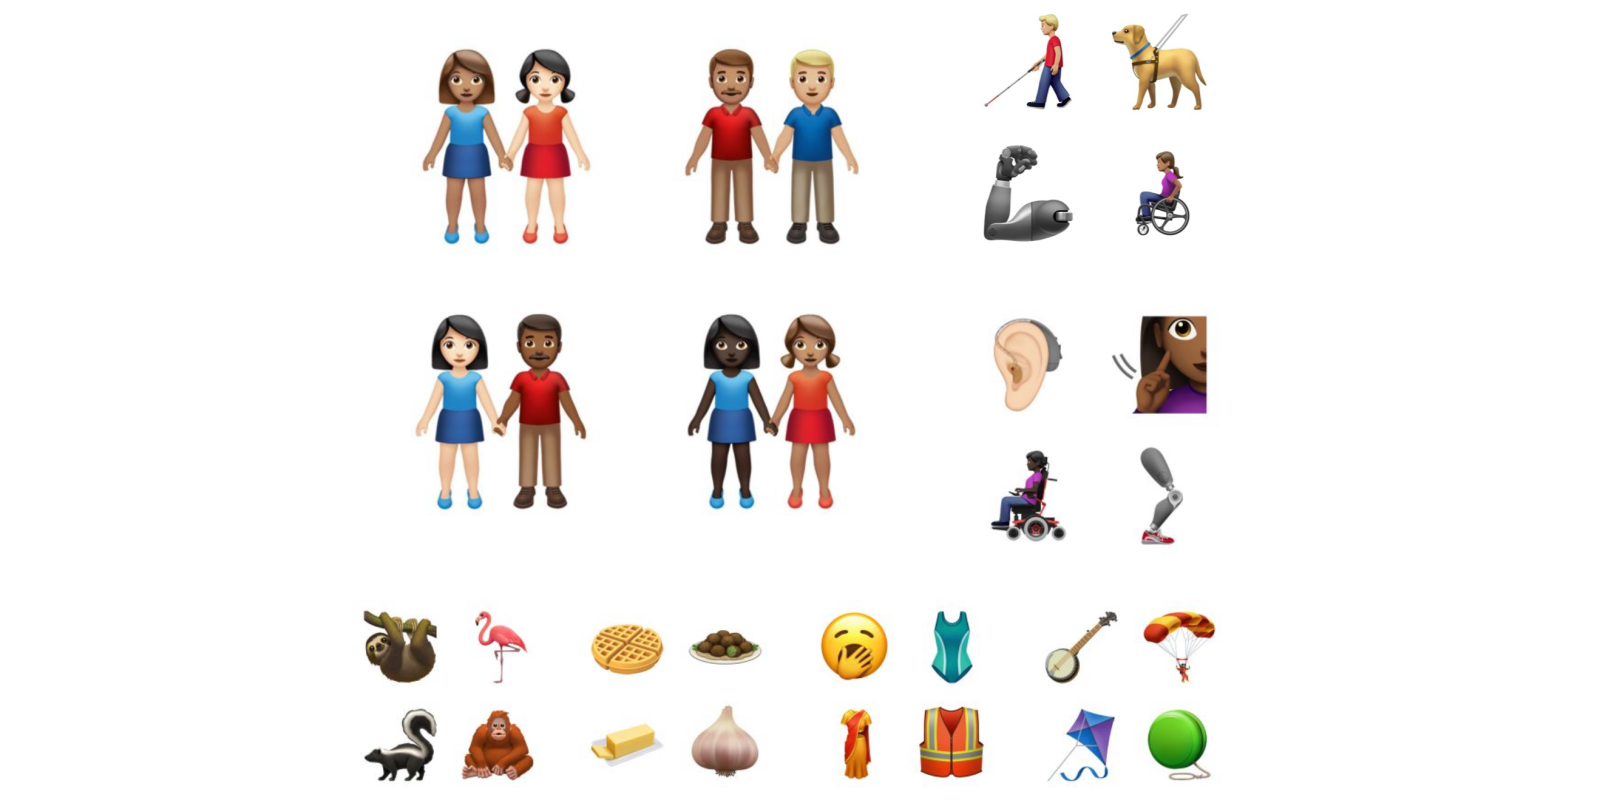 Applen uusia emoji-kuvakkeita.iOS 13.2:n uusia emoji-kuvakkeita.